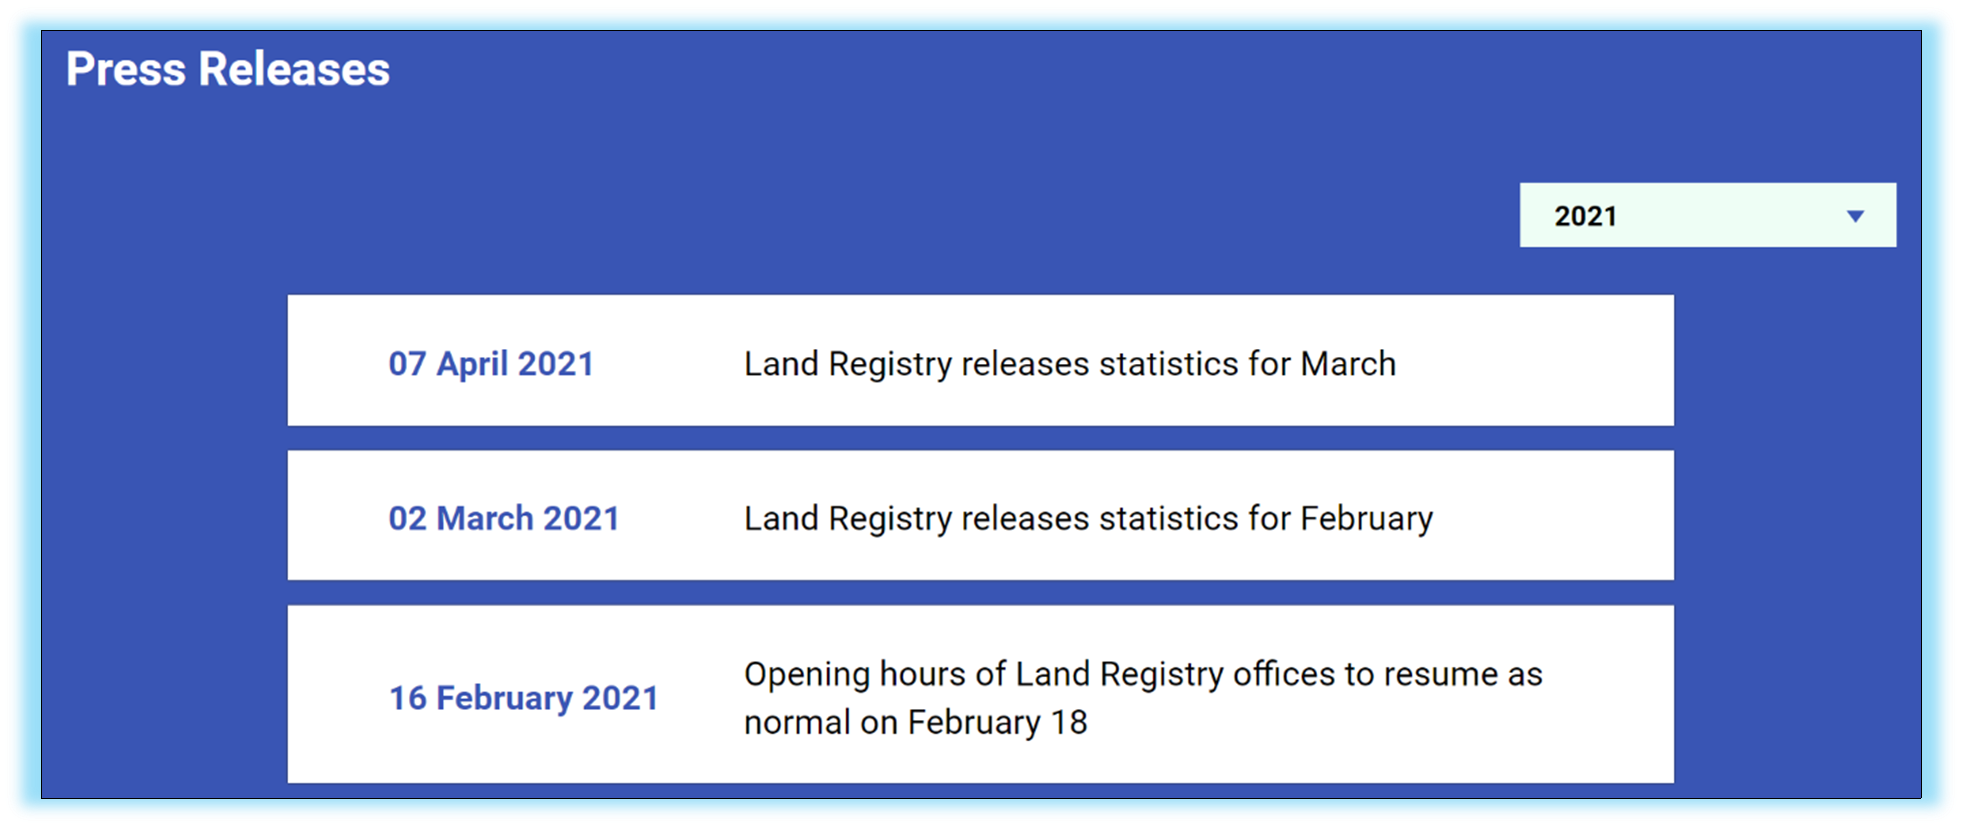 Revamped Website of the Land Registry_Image 7